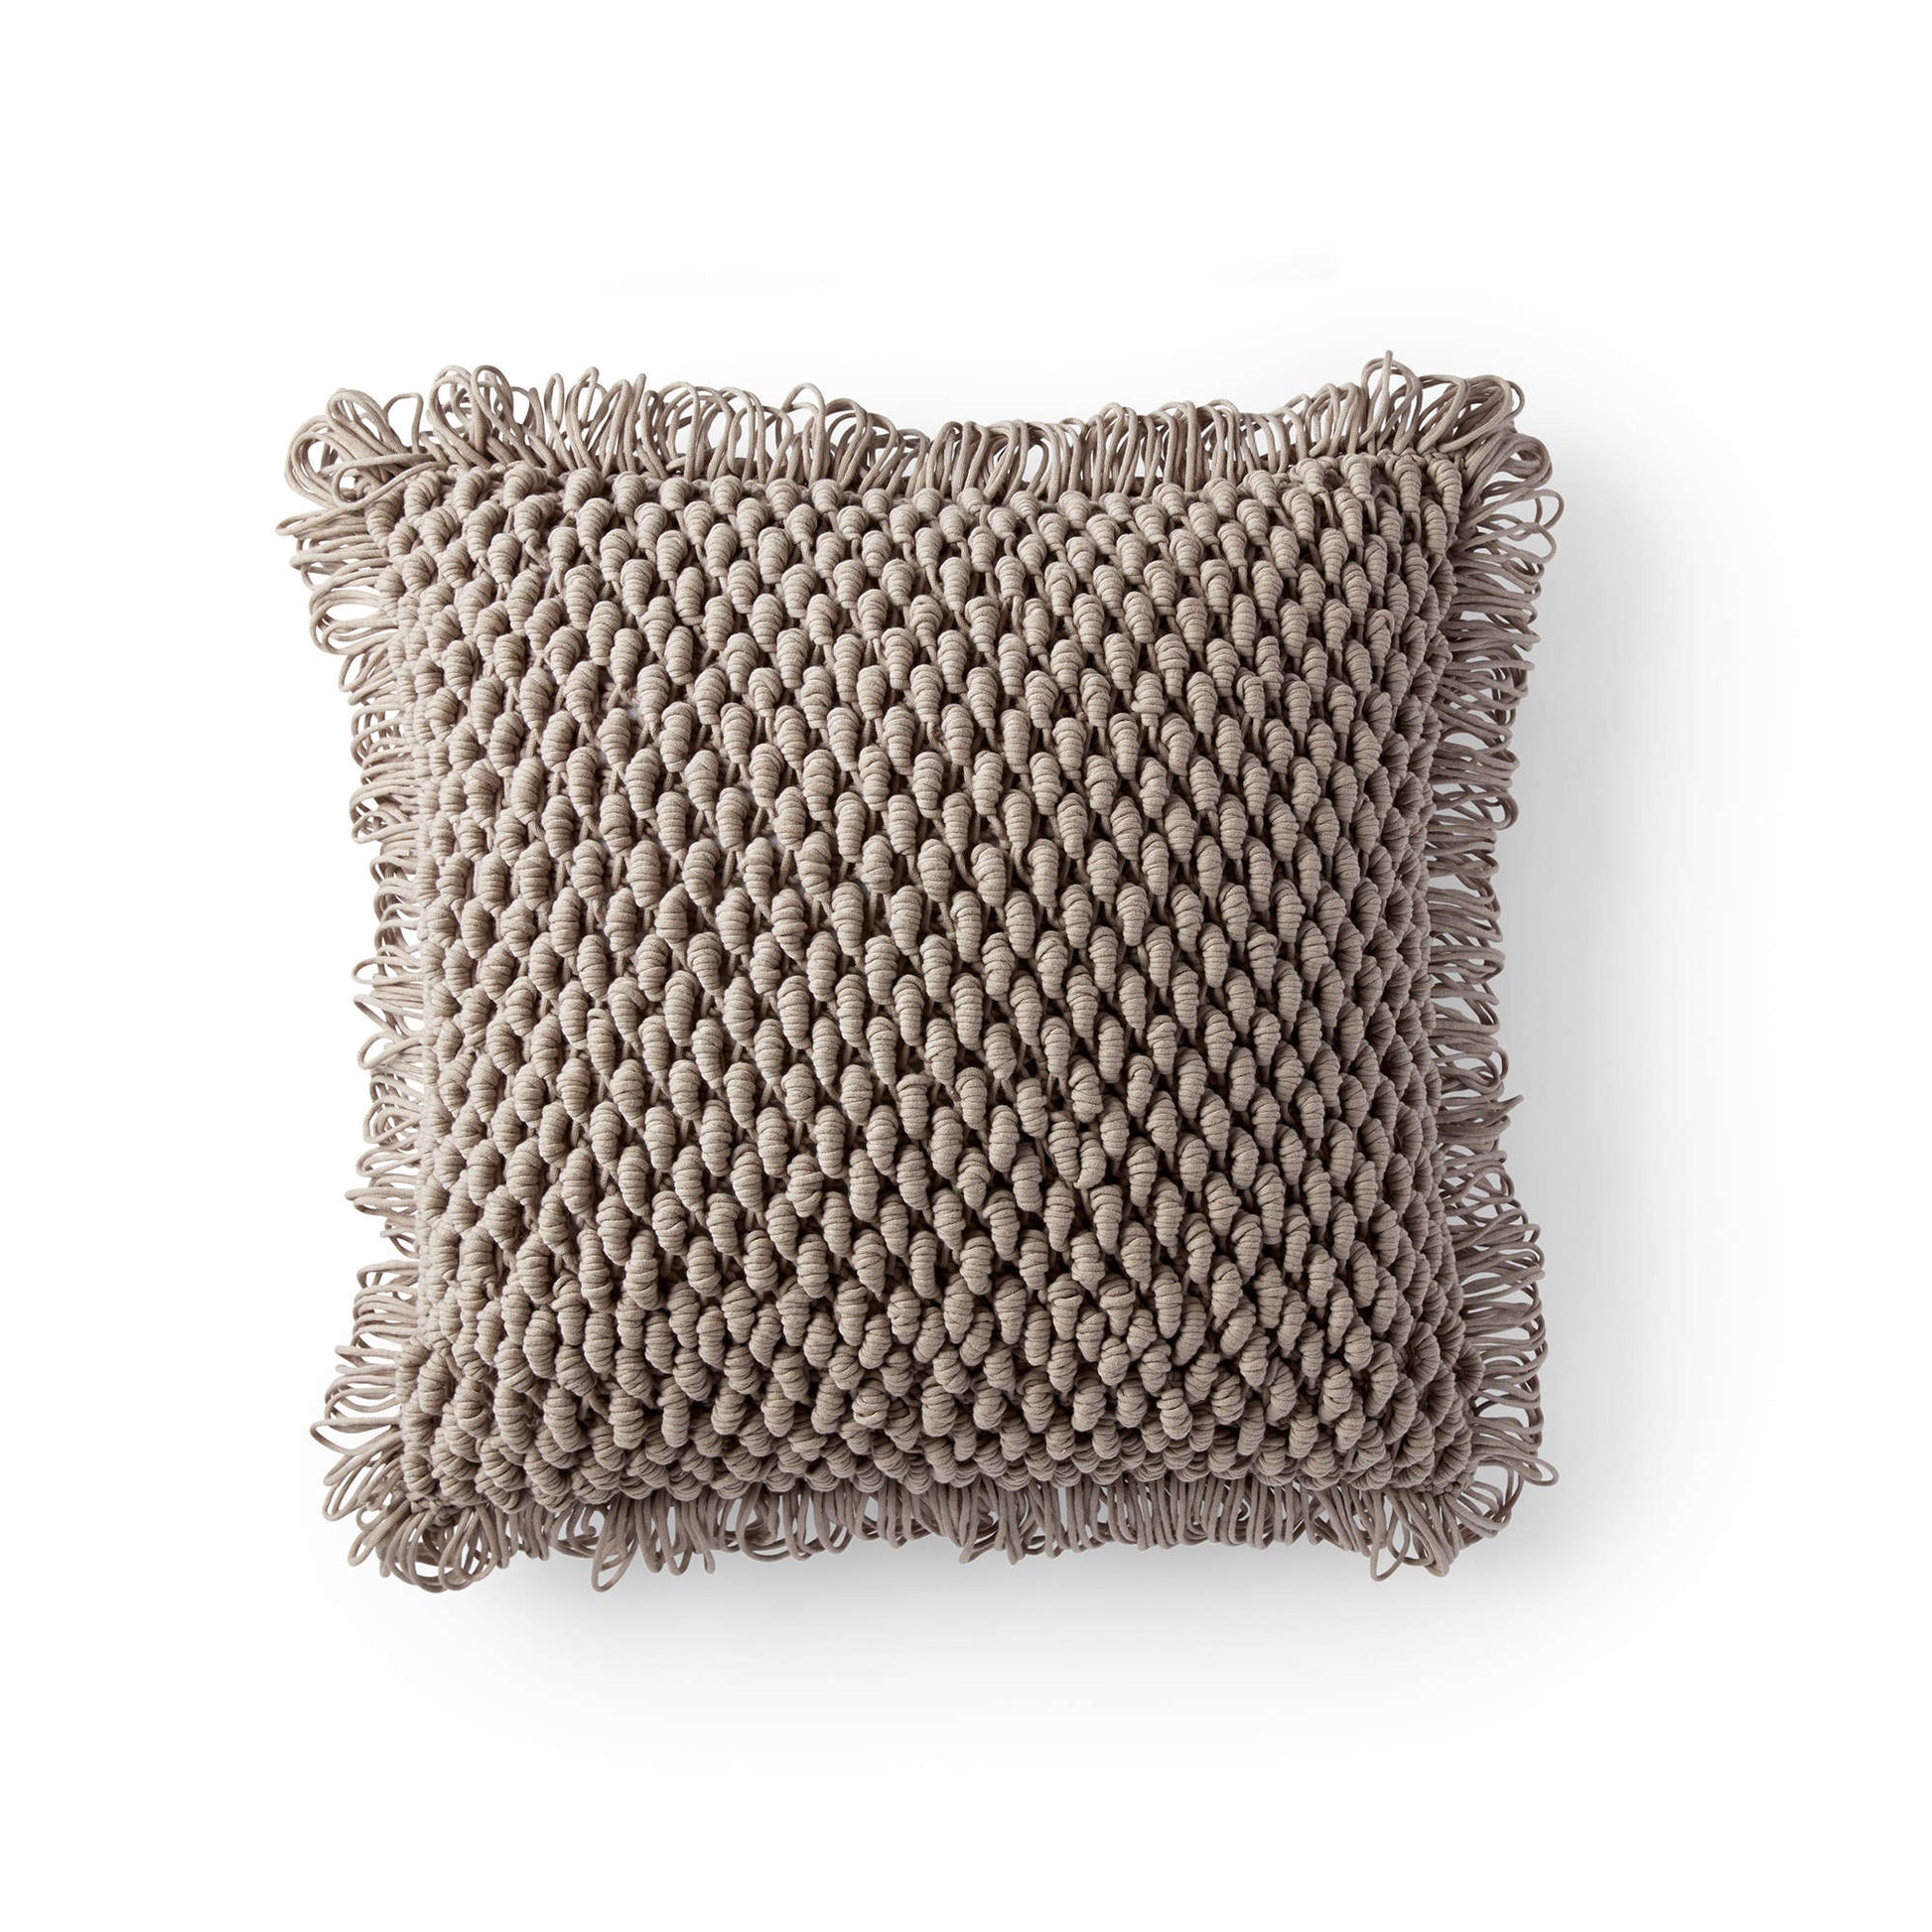 Bernat Bullion Loop Crochet Pillow Crochet Sweater made in Bernat Maker Home Dec yarn